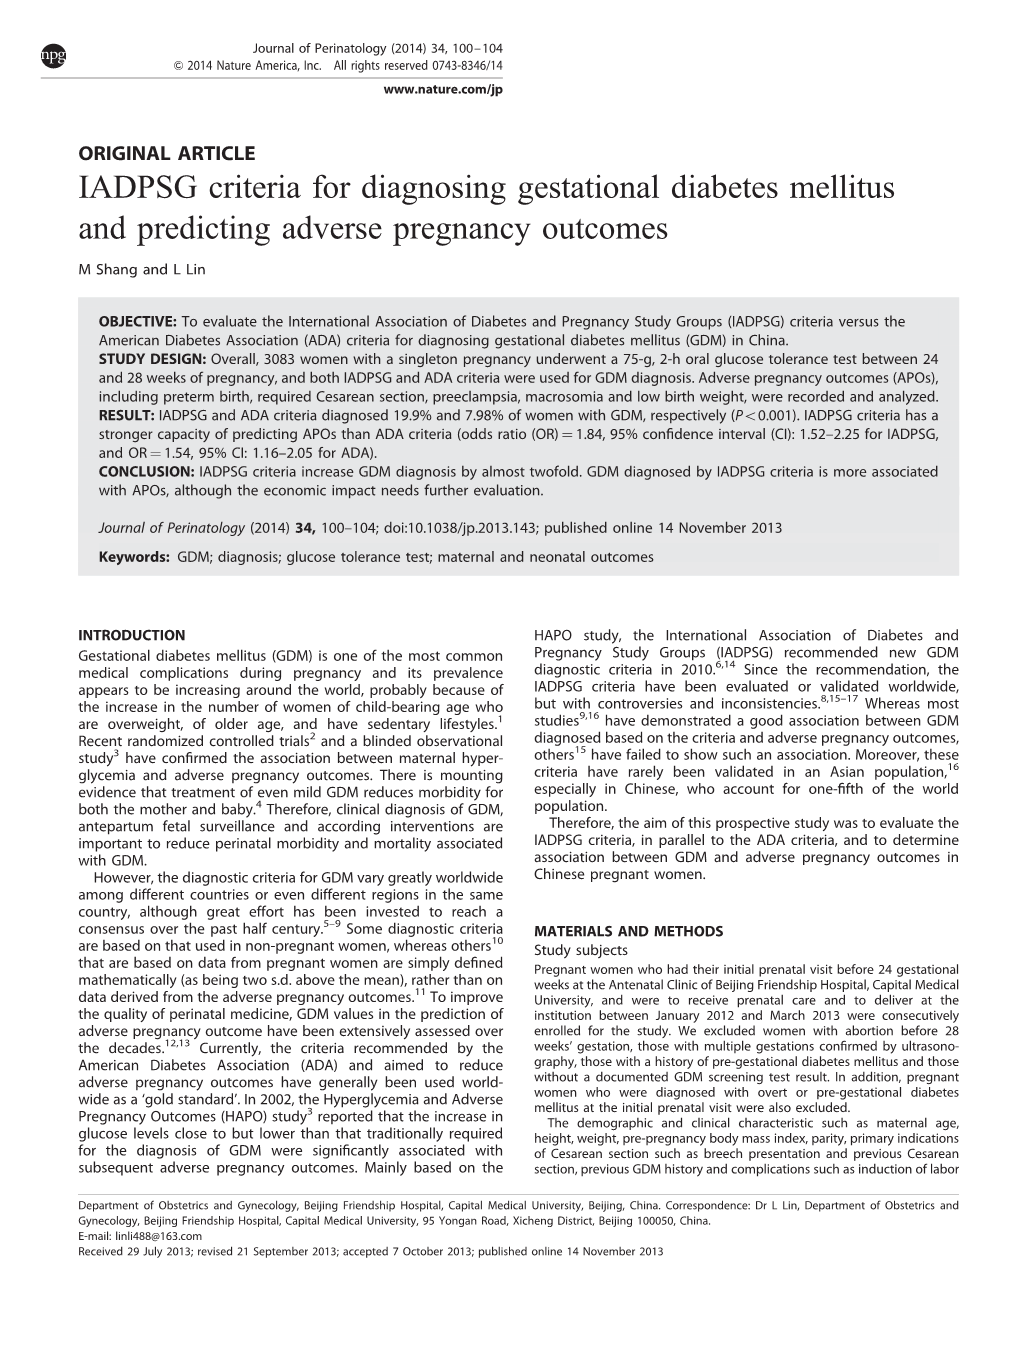 IADPSG Criteria for Diagnosing Gestational Diabetes Mellitus and Predicting Adverse Pregnancy Outcomes